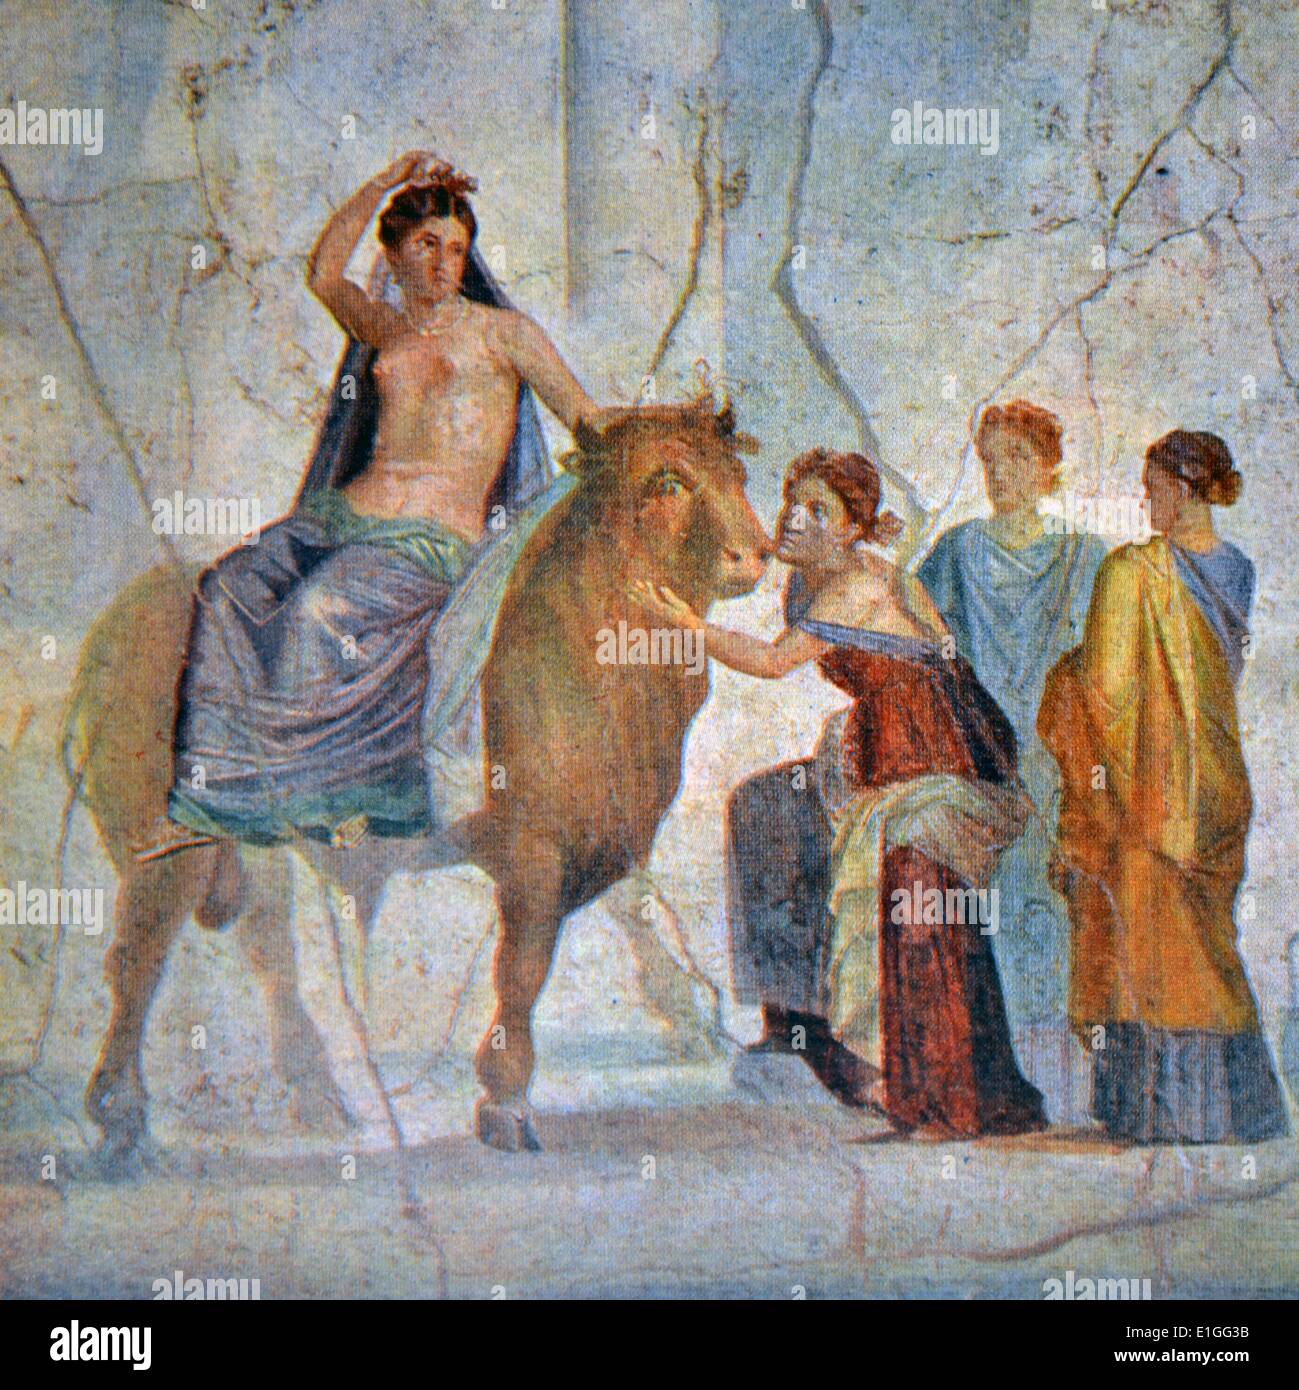 Fresco descubierto en Pompeya. Fechado a comienzos de A.D. Foto de stock